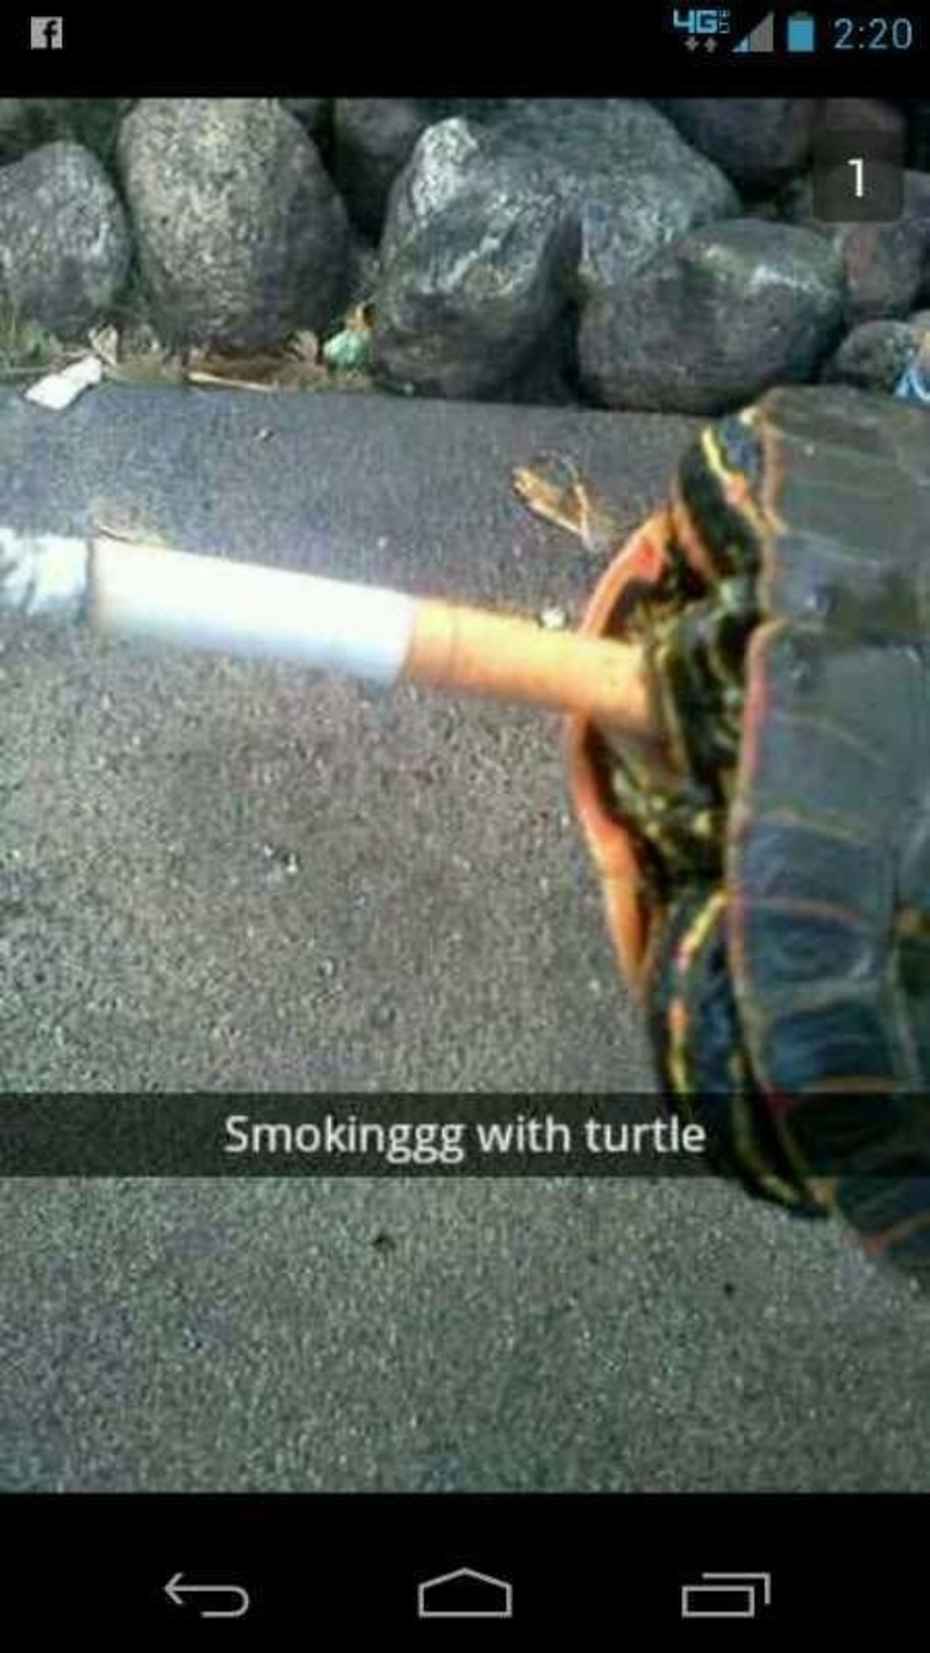 snapchat cringe Snapchat - 46. Smokinggg with turtle